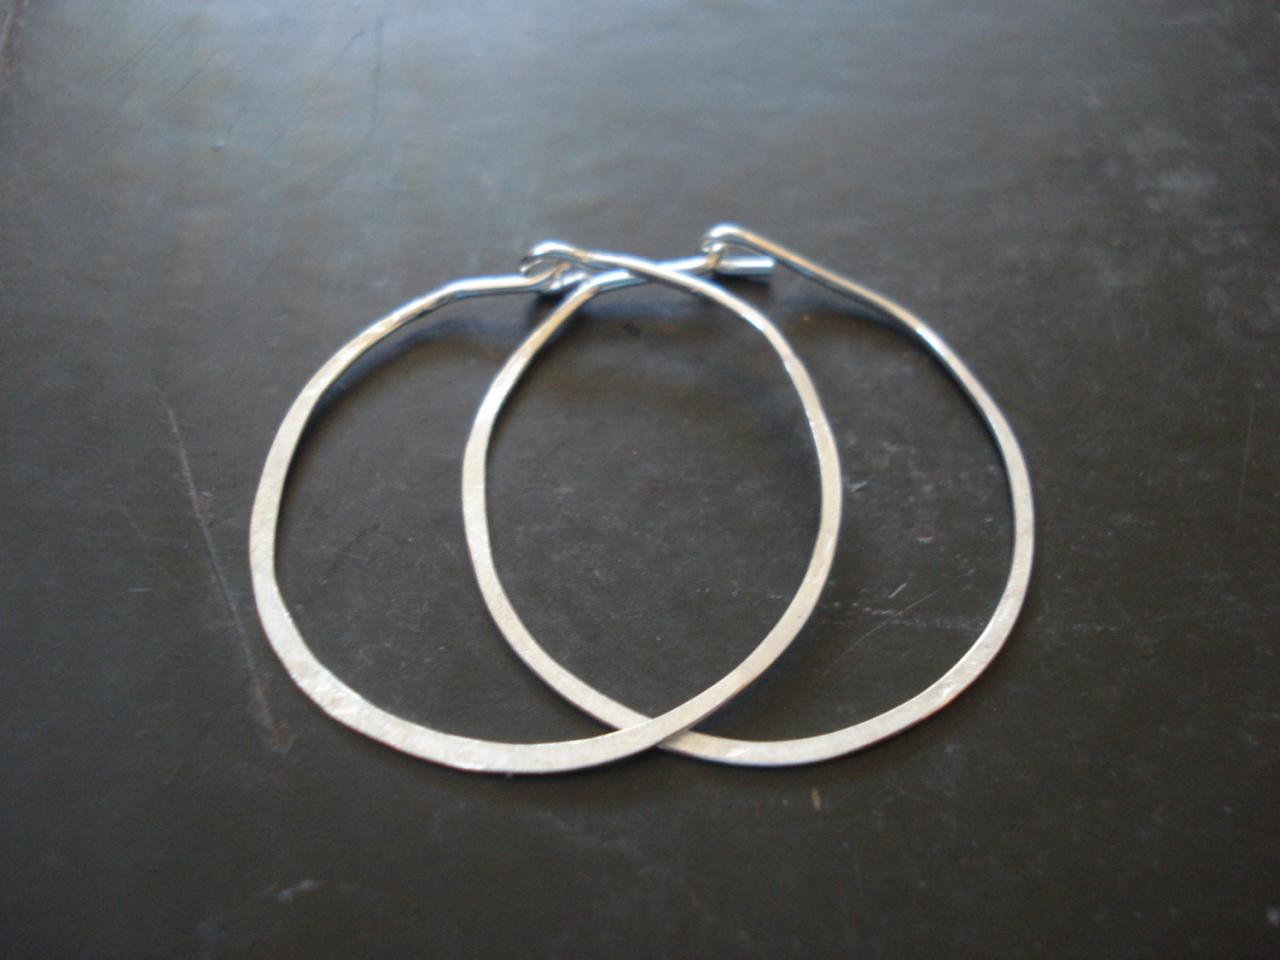 2 Inch Sterling Silver Hoop Earrings, Sterling Silver Handmade Jewelry